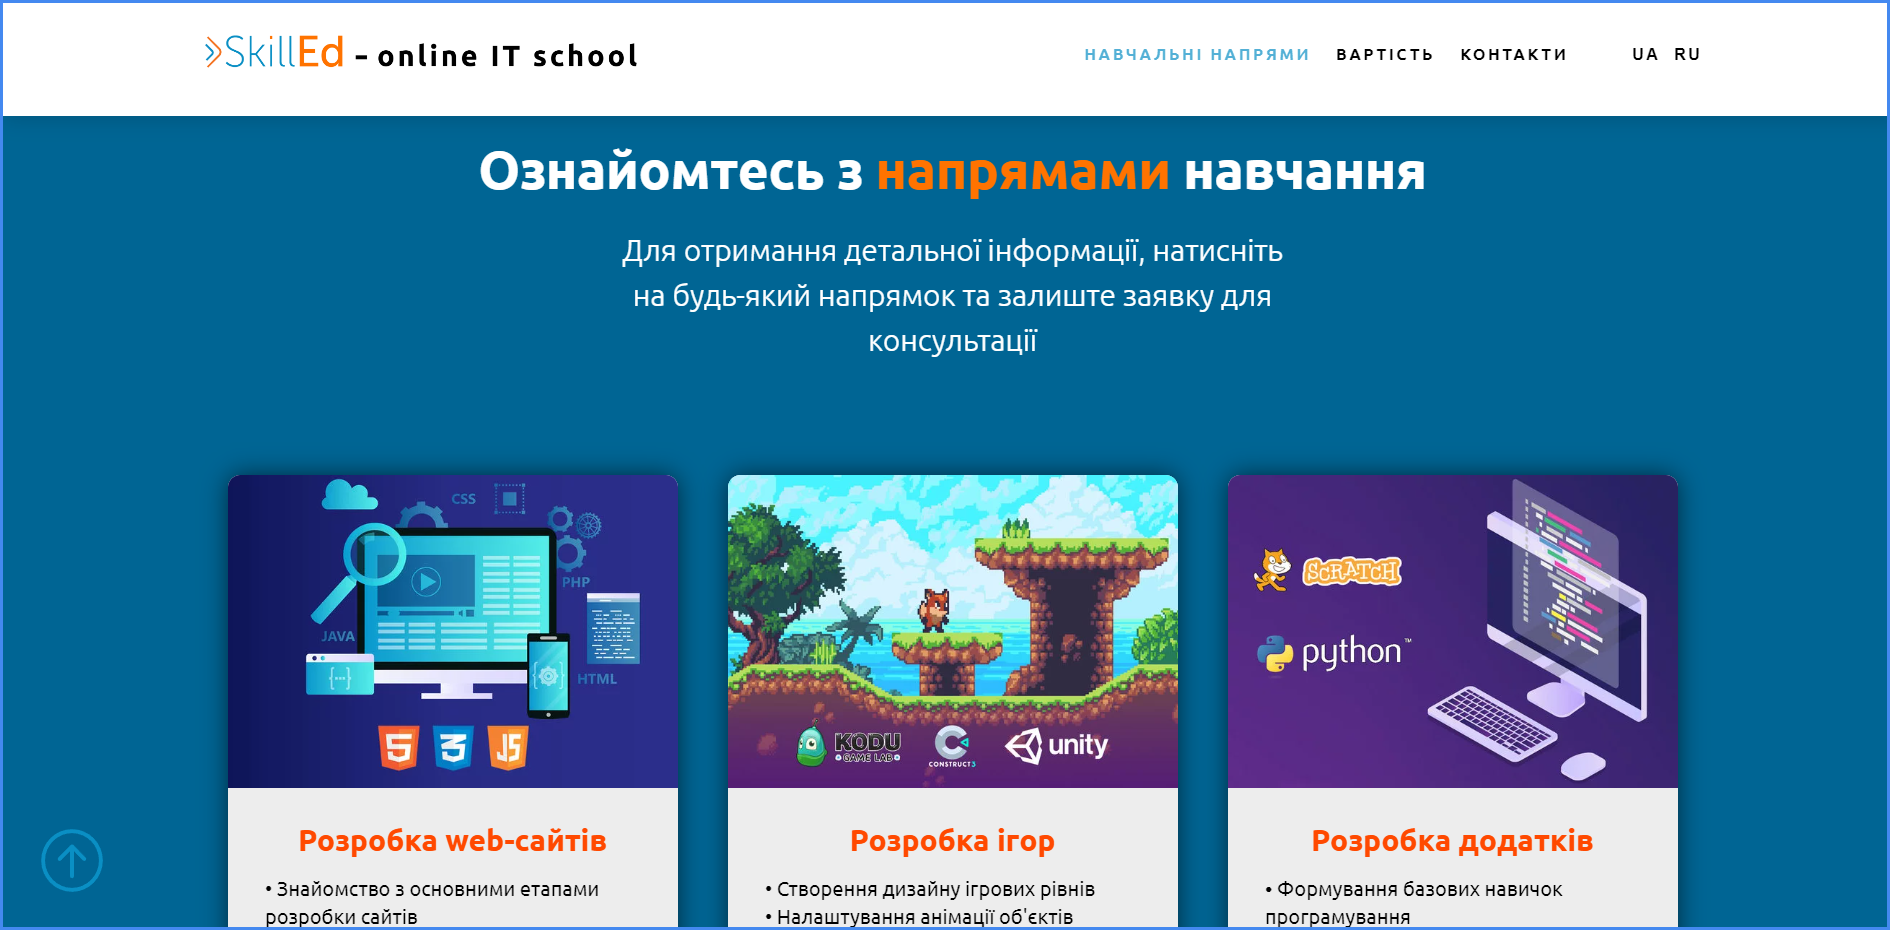 programming courses for children online Skilled